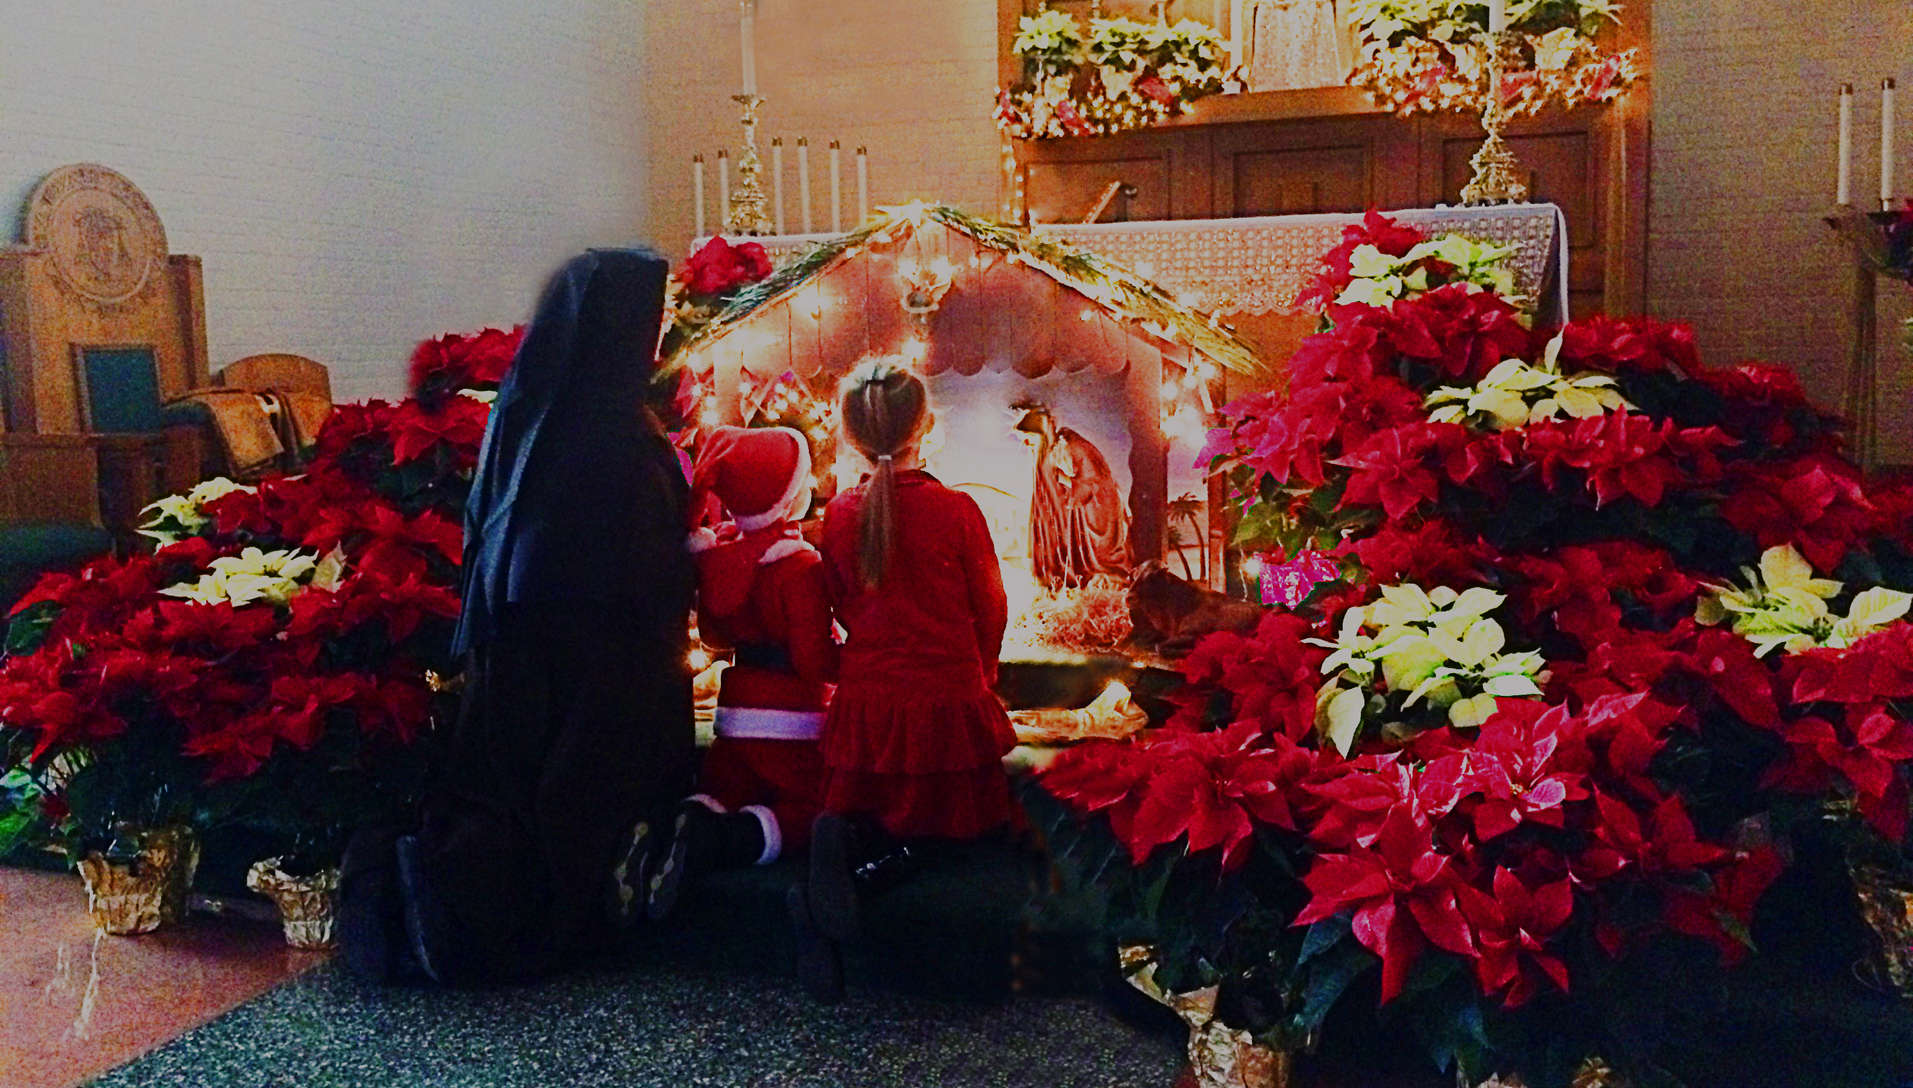 Sister and children kneeling in front of nativity scene